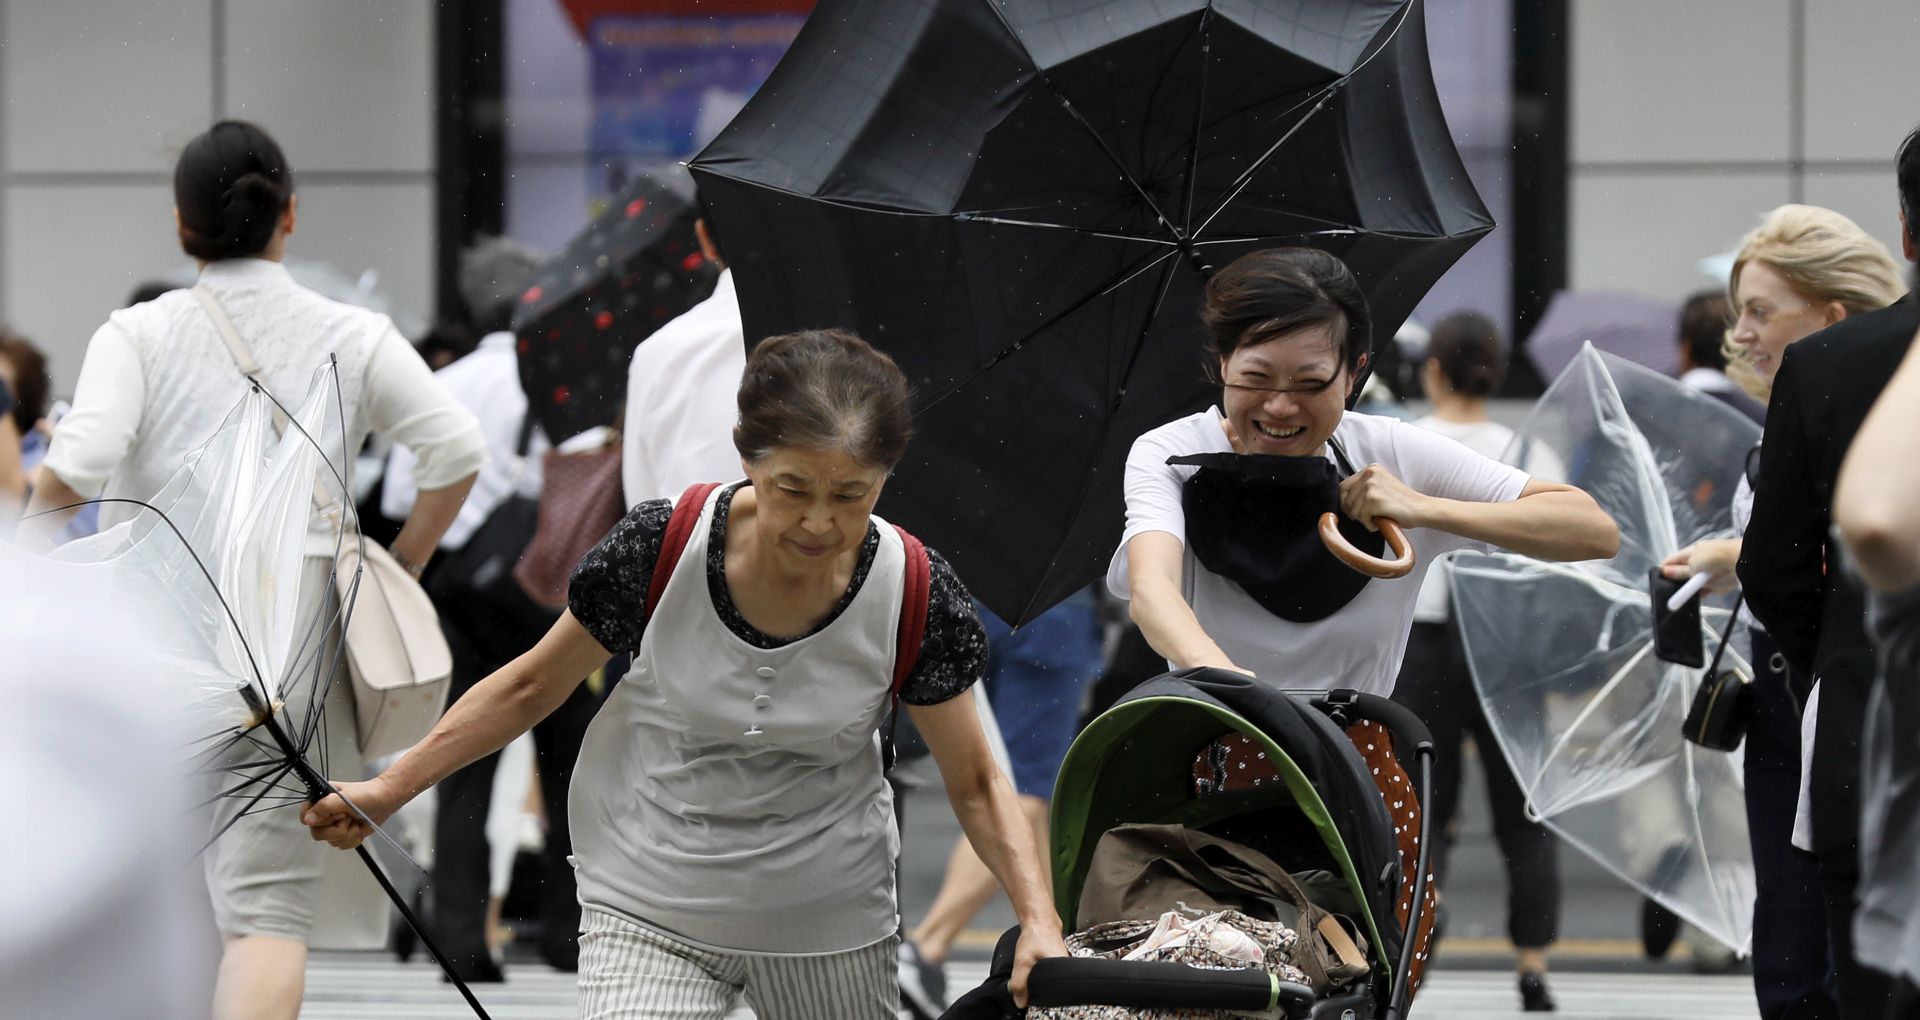 epa06995533 Pedestrians using umbrellas struggle against strong wind and rain in Tokyo, Japan, 04 September 2018. Powerful Typhoon Jebi, the 21st typhoon of the season, has made landfall on Shikoku Island and western Japan, bringing strong winds, high waves and heavy rains.  EPA/KIMIMASA MAYAMA